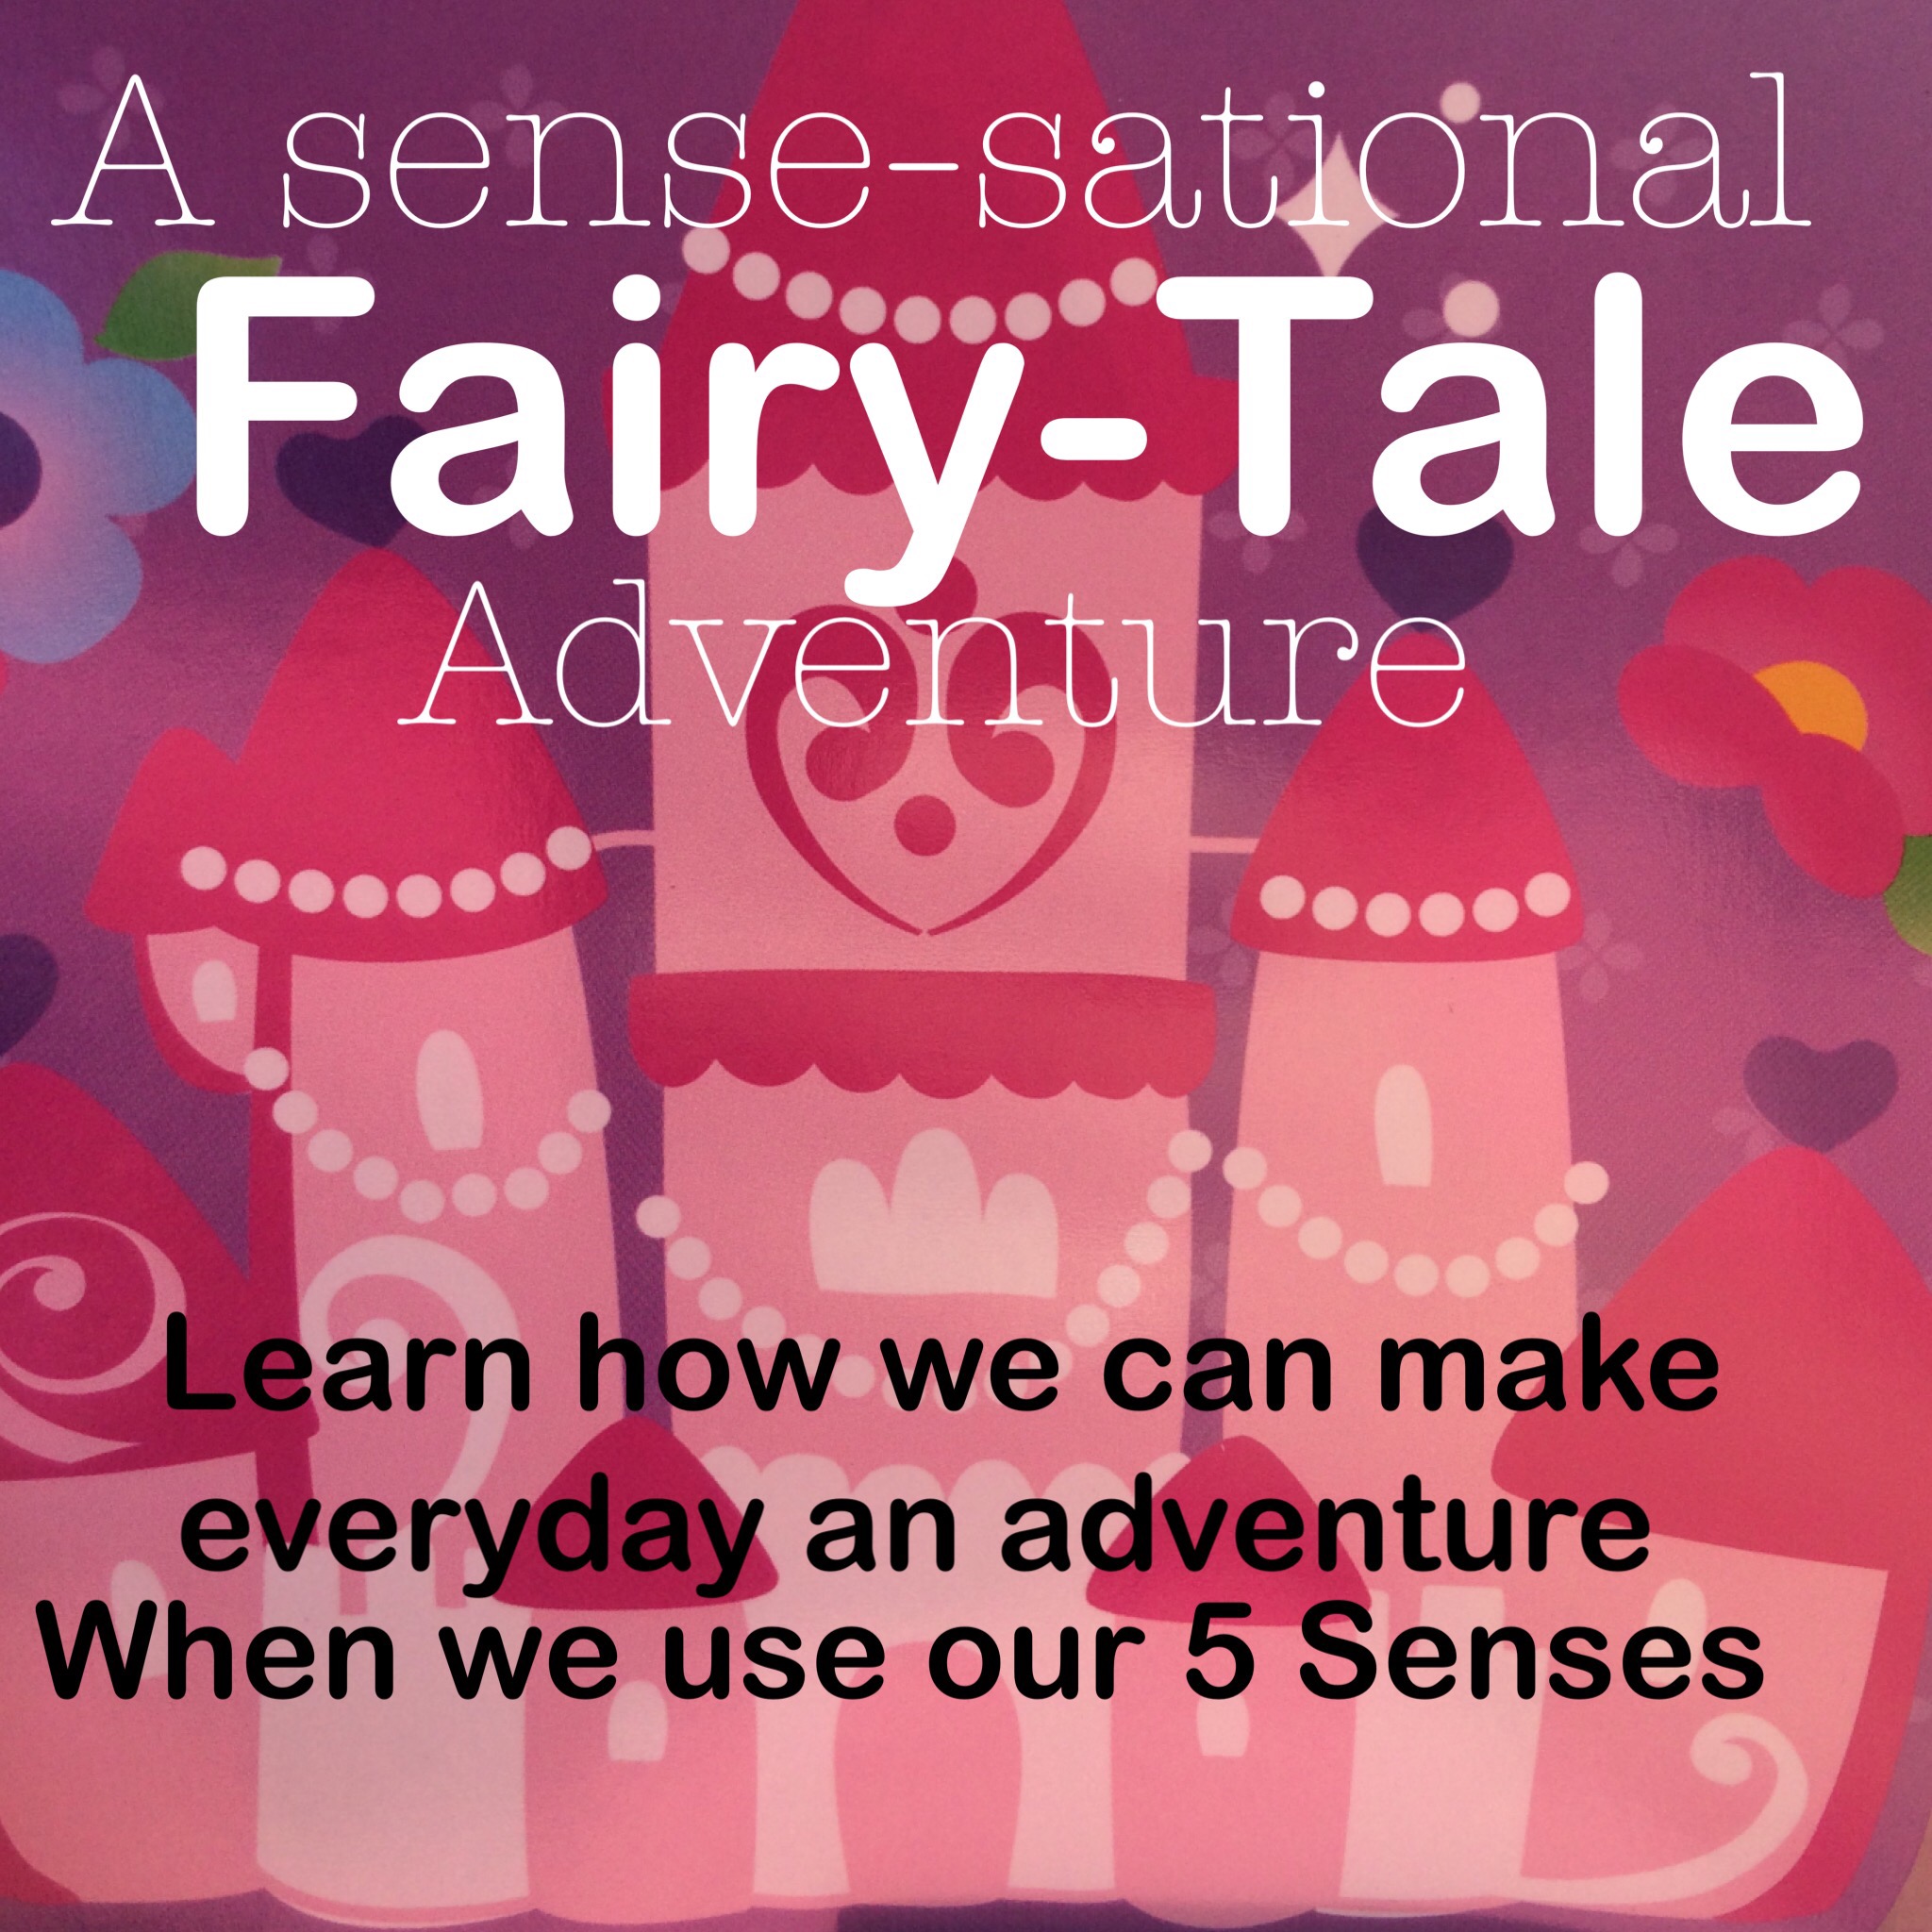 Showing My DisneySide With a Sense-Sational Fairytale Adventure